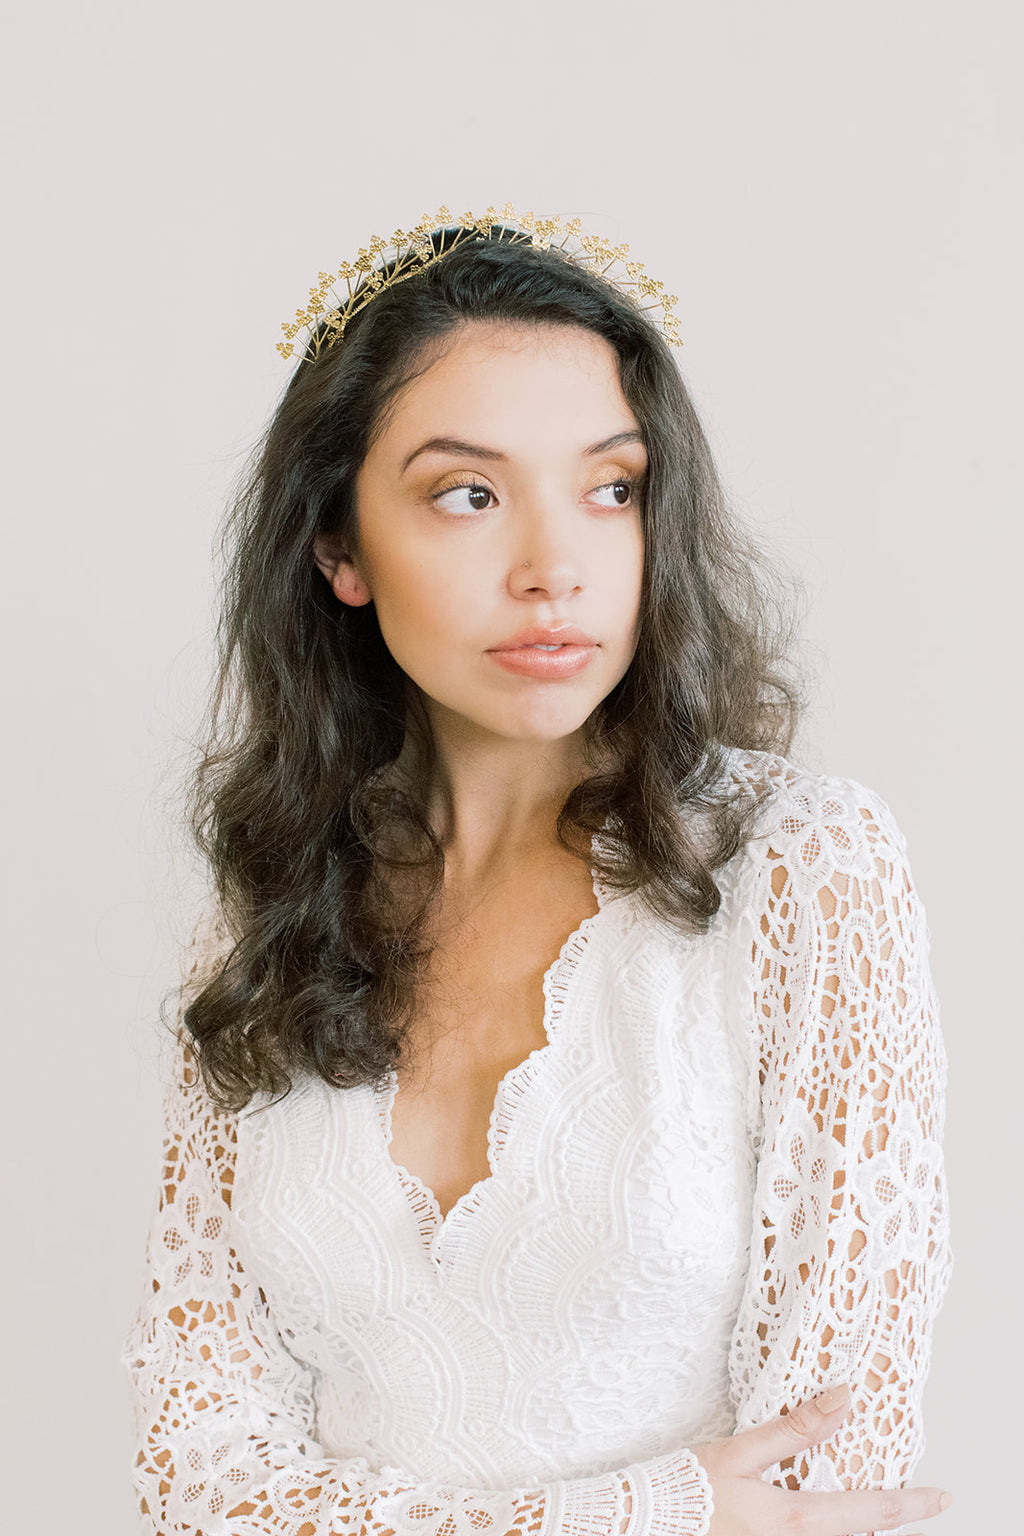 Queen Anne's Lace Crown - Gold Headband, Flower Crown, Bridal, Head Piece, Hair Accessories